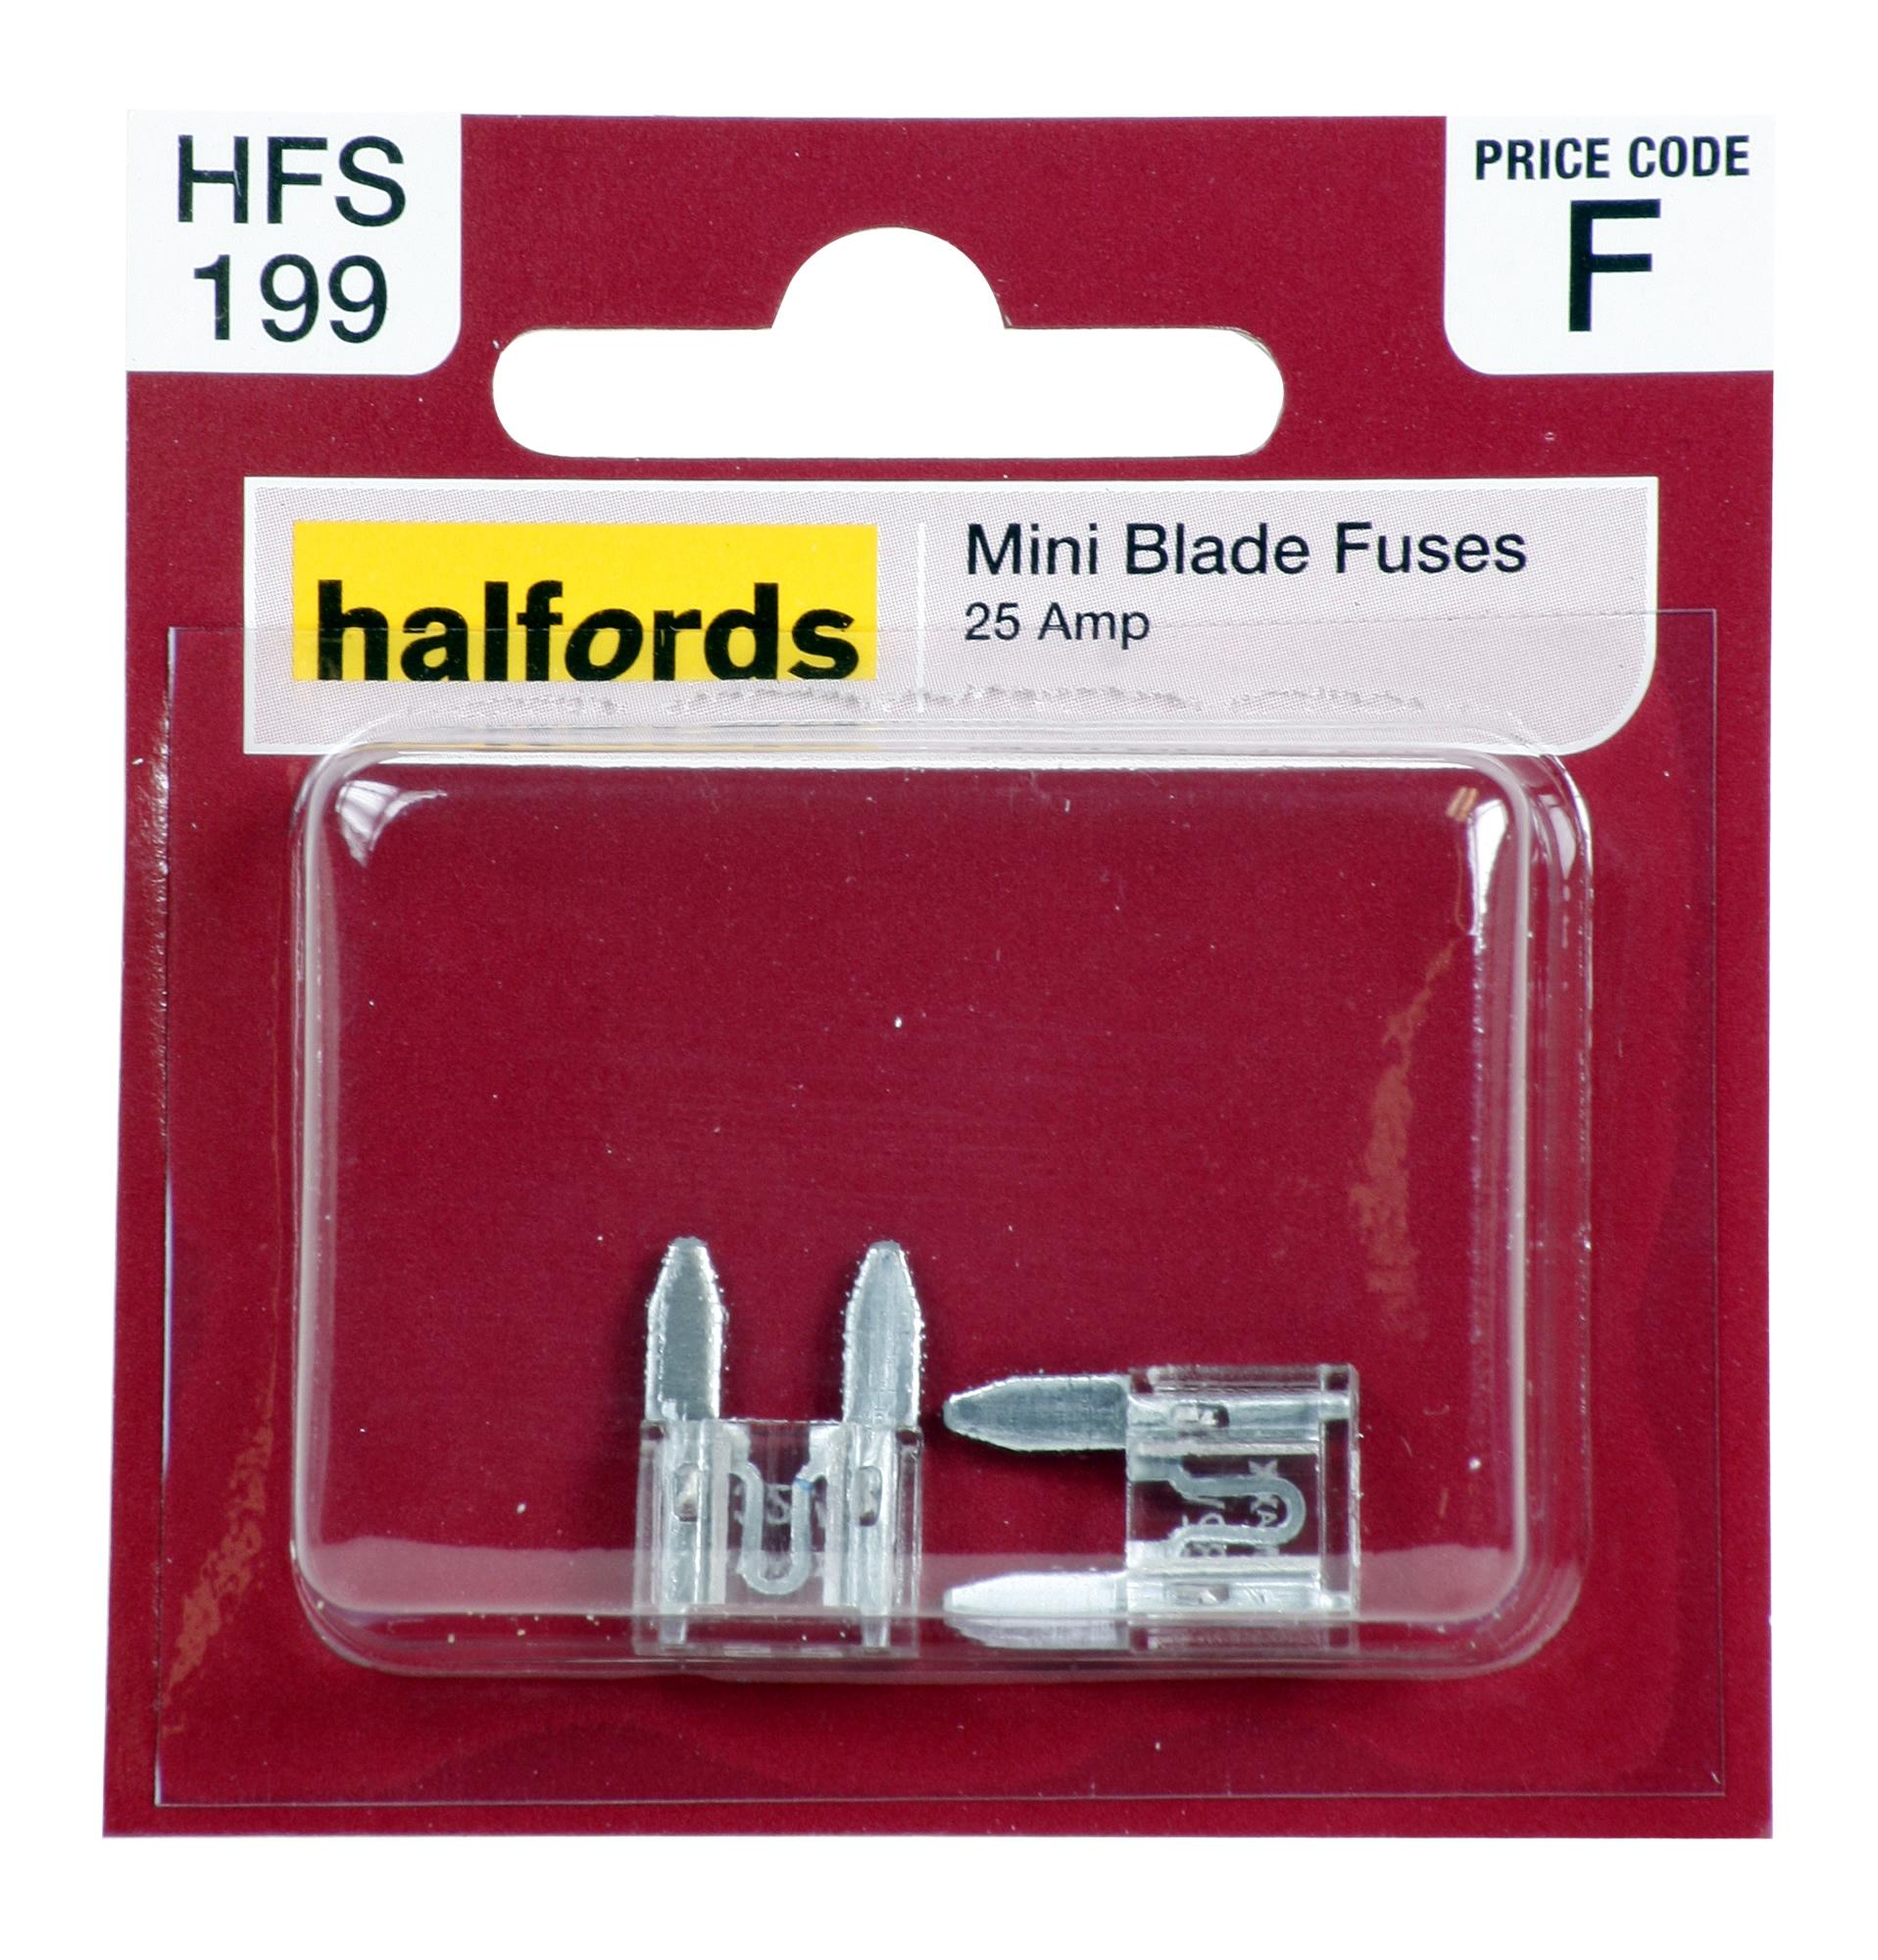 Halfords Mini Blade Fuses 25 Amp (Hfs199)